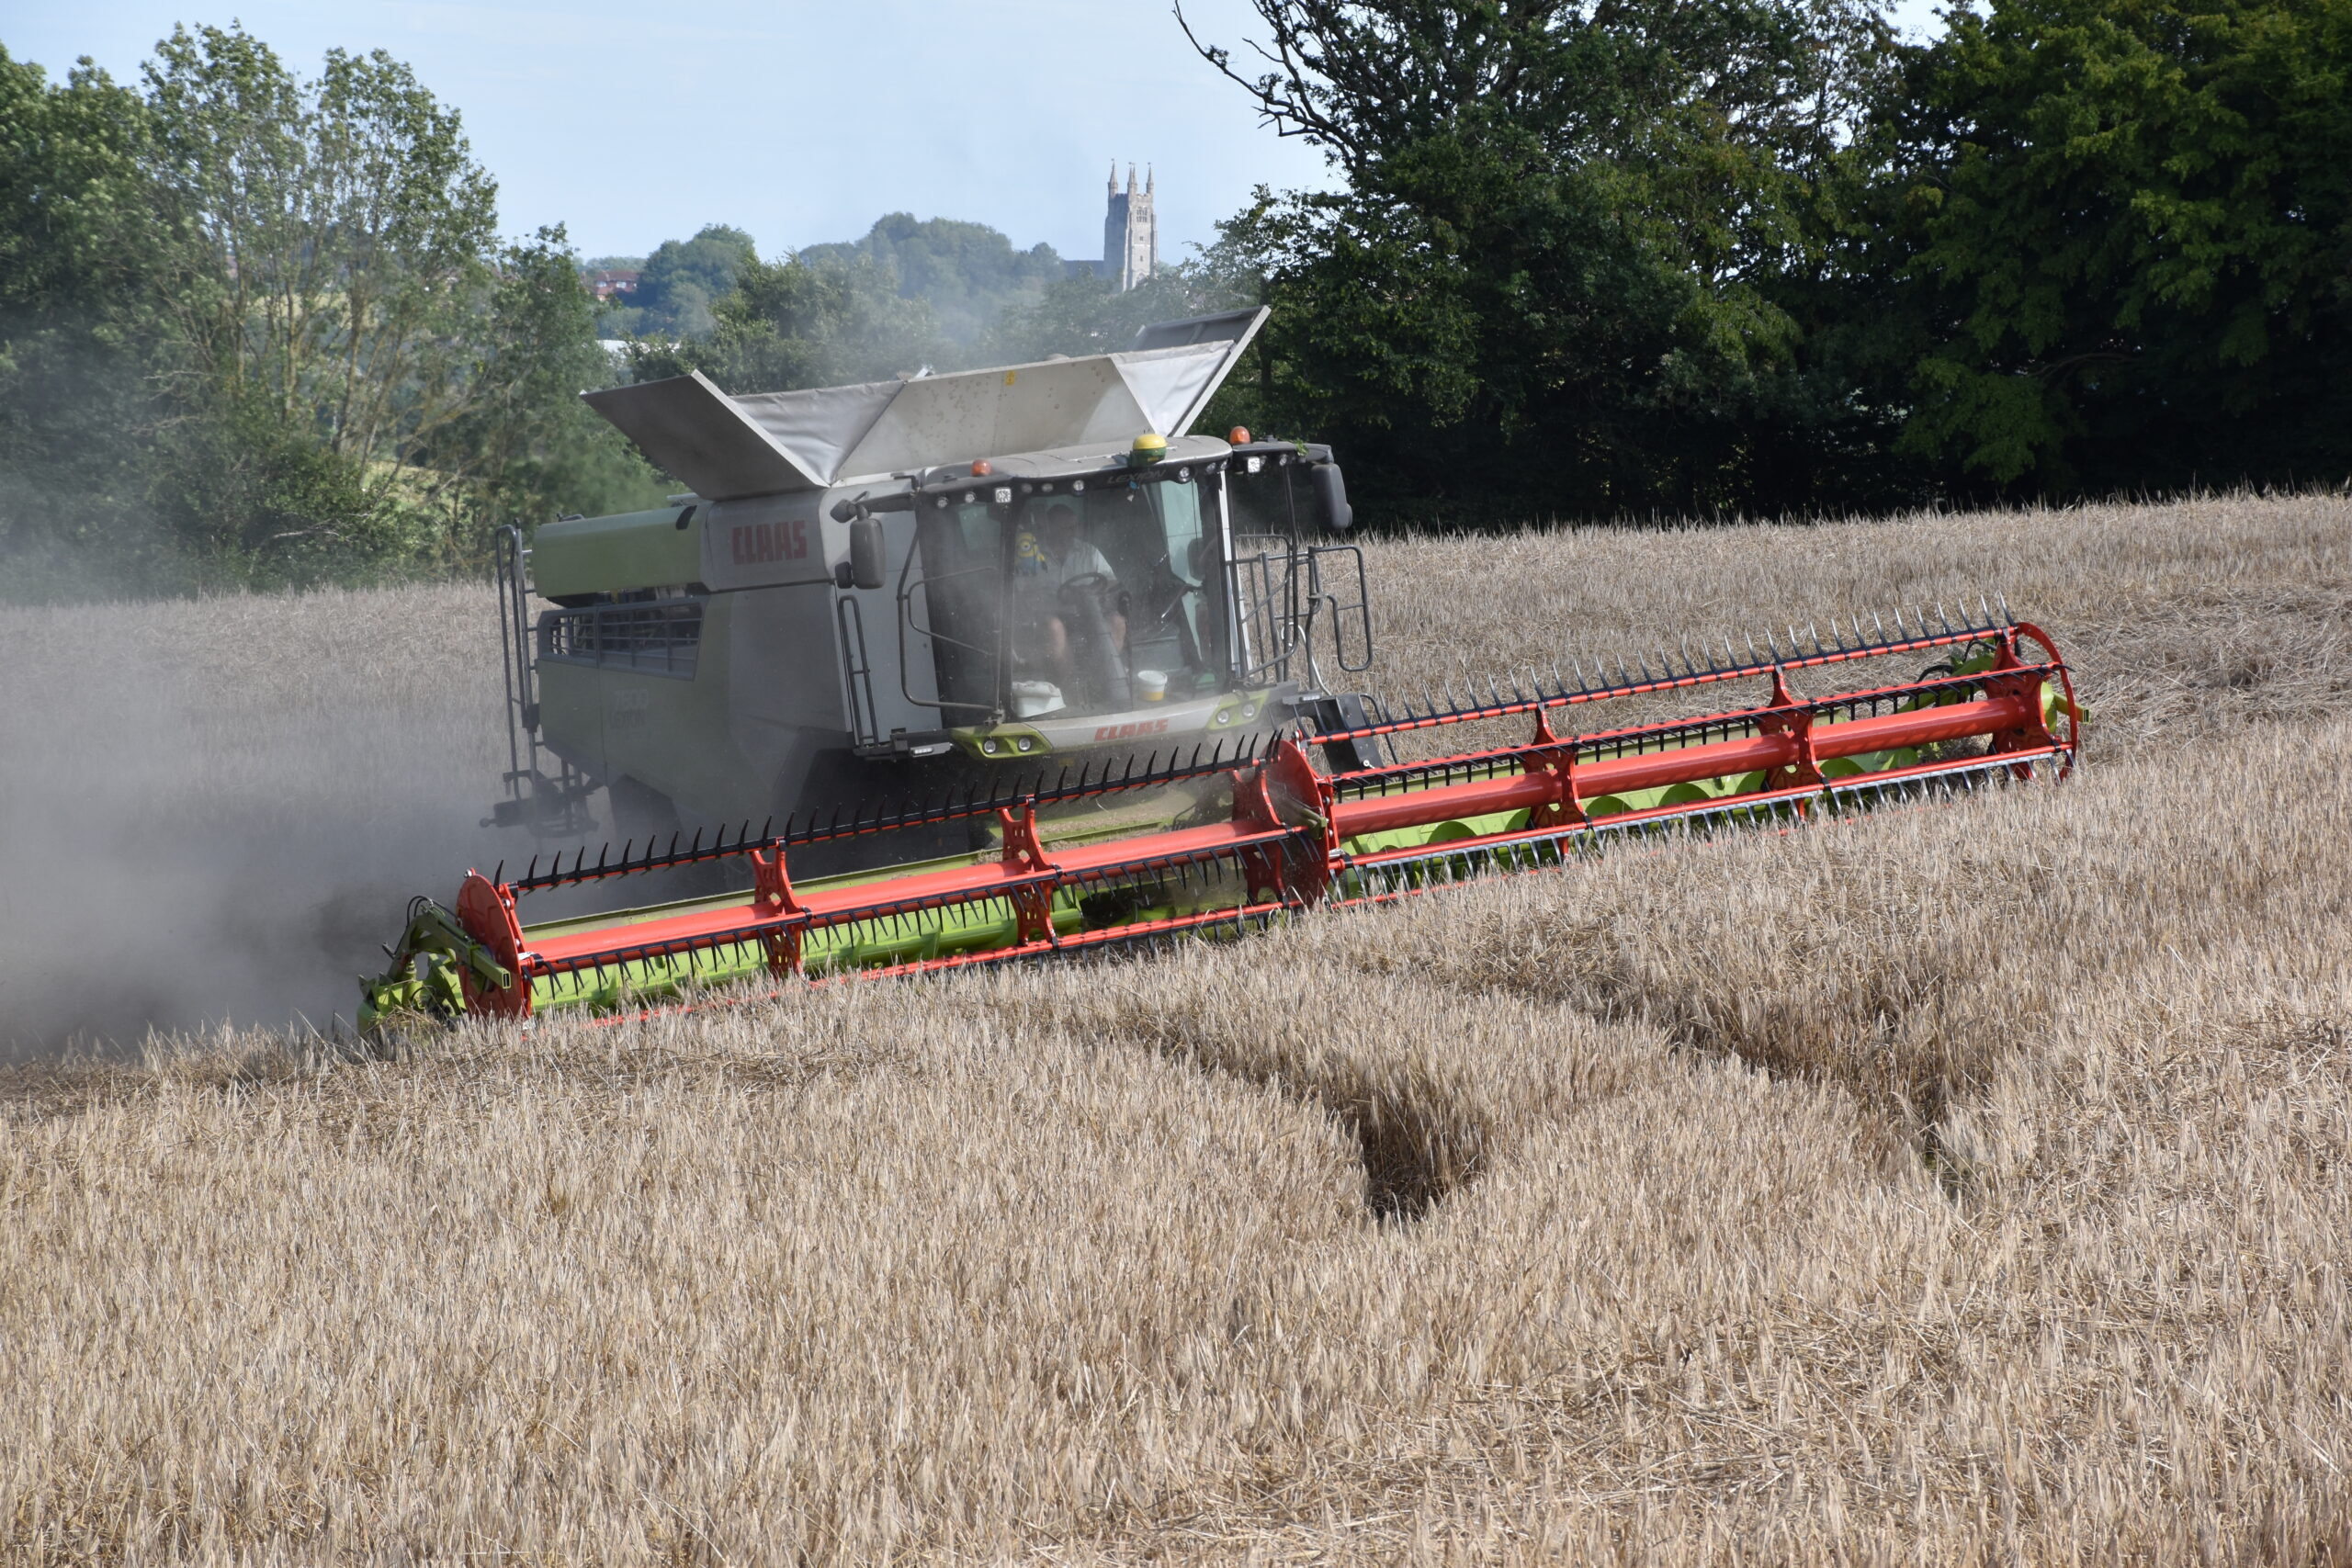 Claas Lexion harvesting Barley